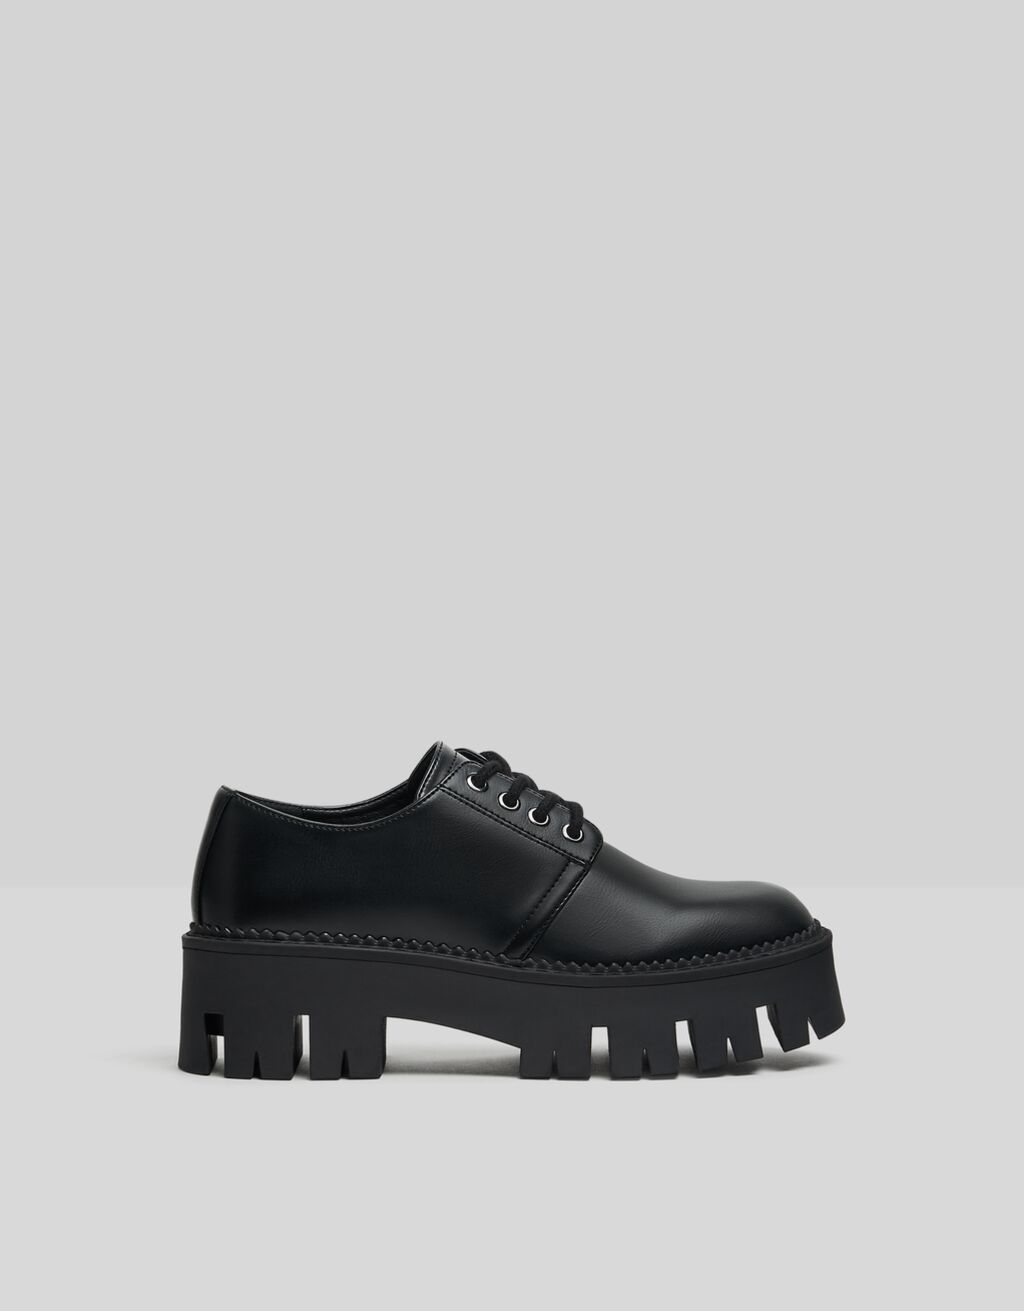 black flat platform shoes